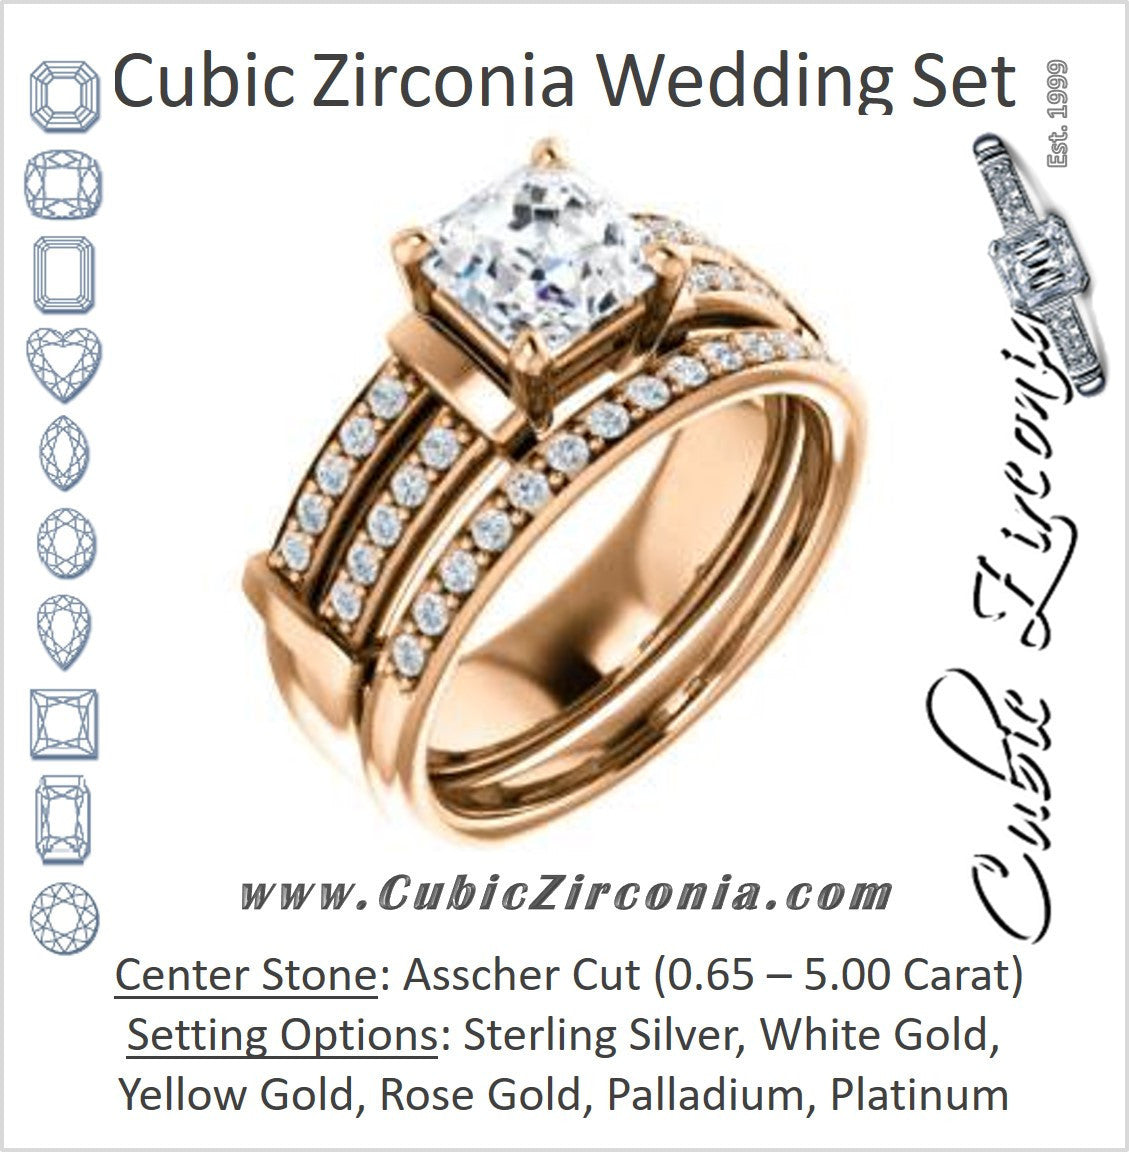 CZ Wedding Set, featuring The Rachana engagement ring (Customizable Asscher Cut Design with Wide Split-Pavé Band and Euro Shank)